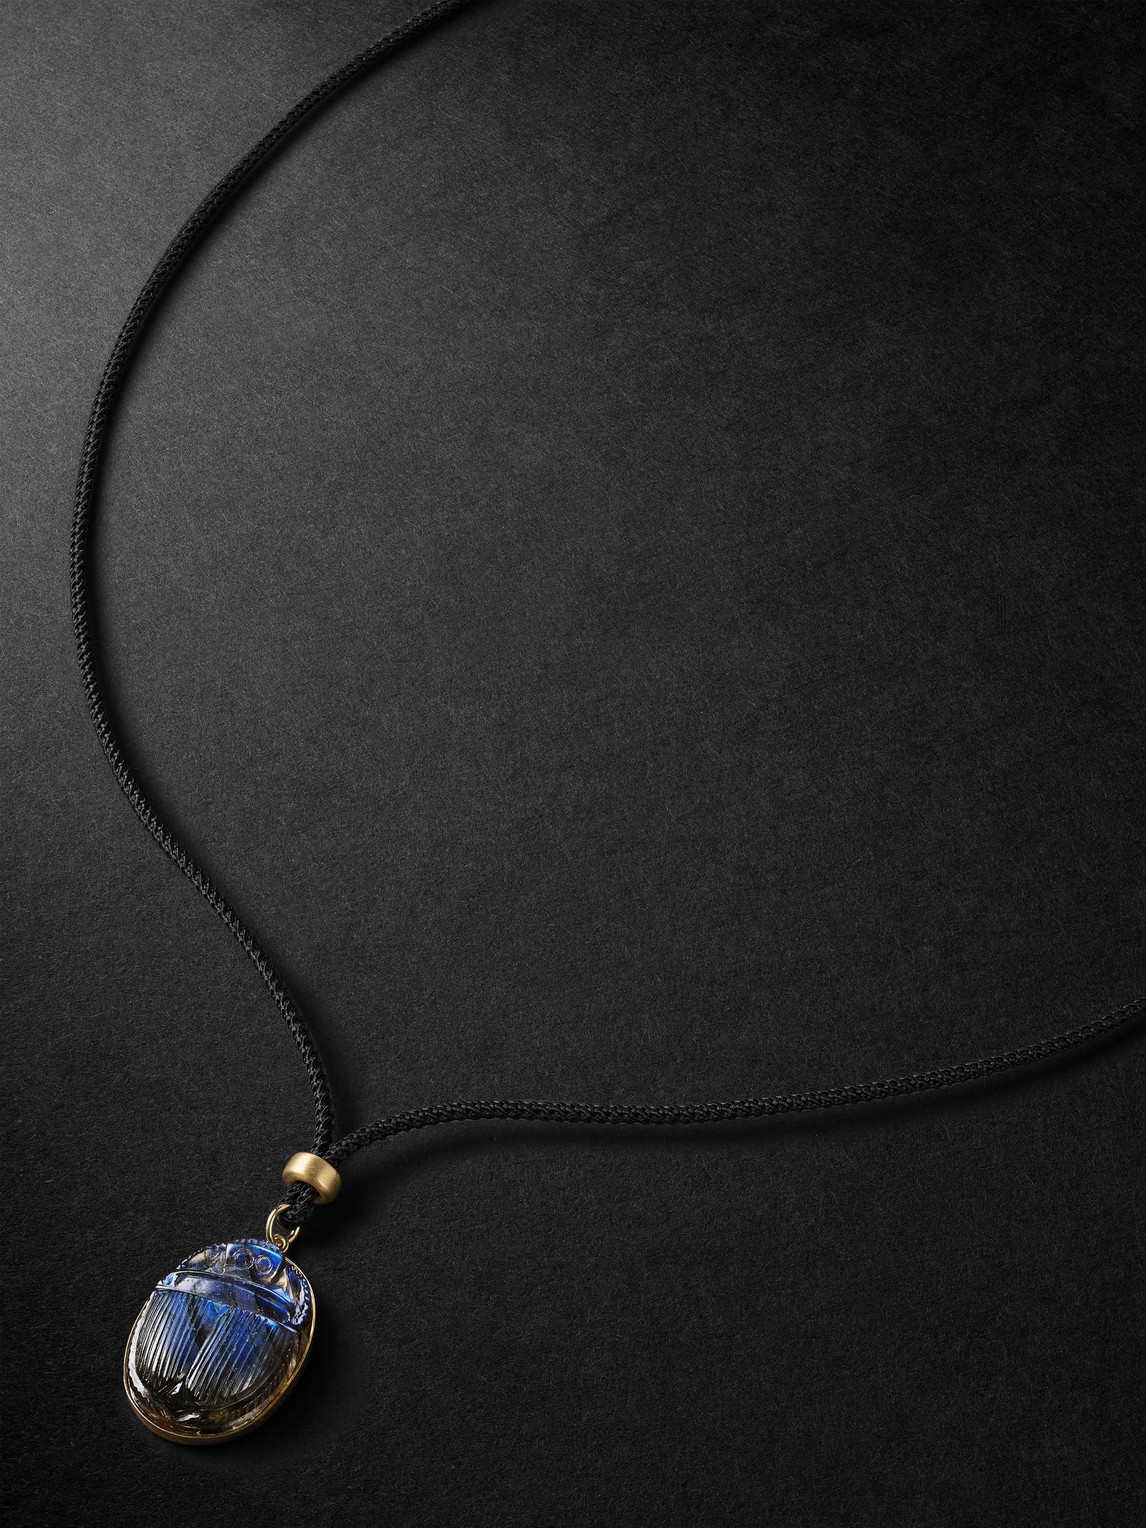 Jacquie Aiche Gold, Labradorite And Cord Necklace In Blue